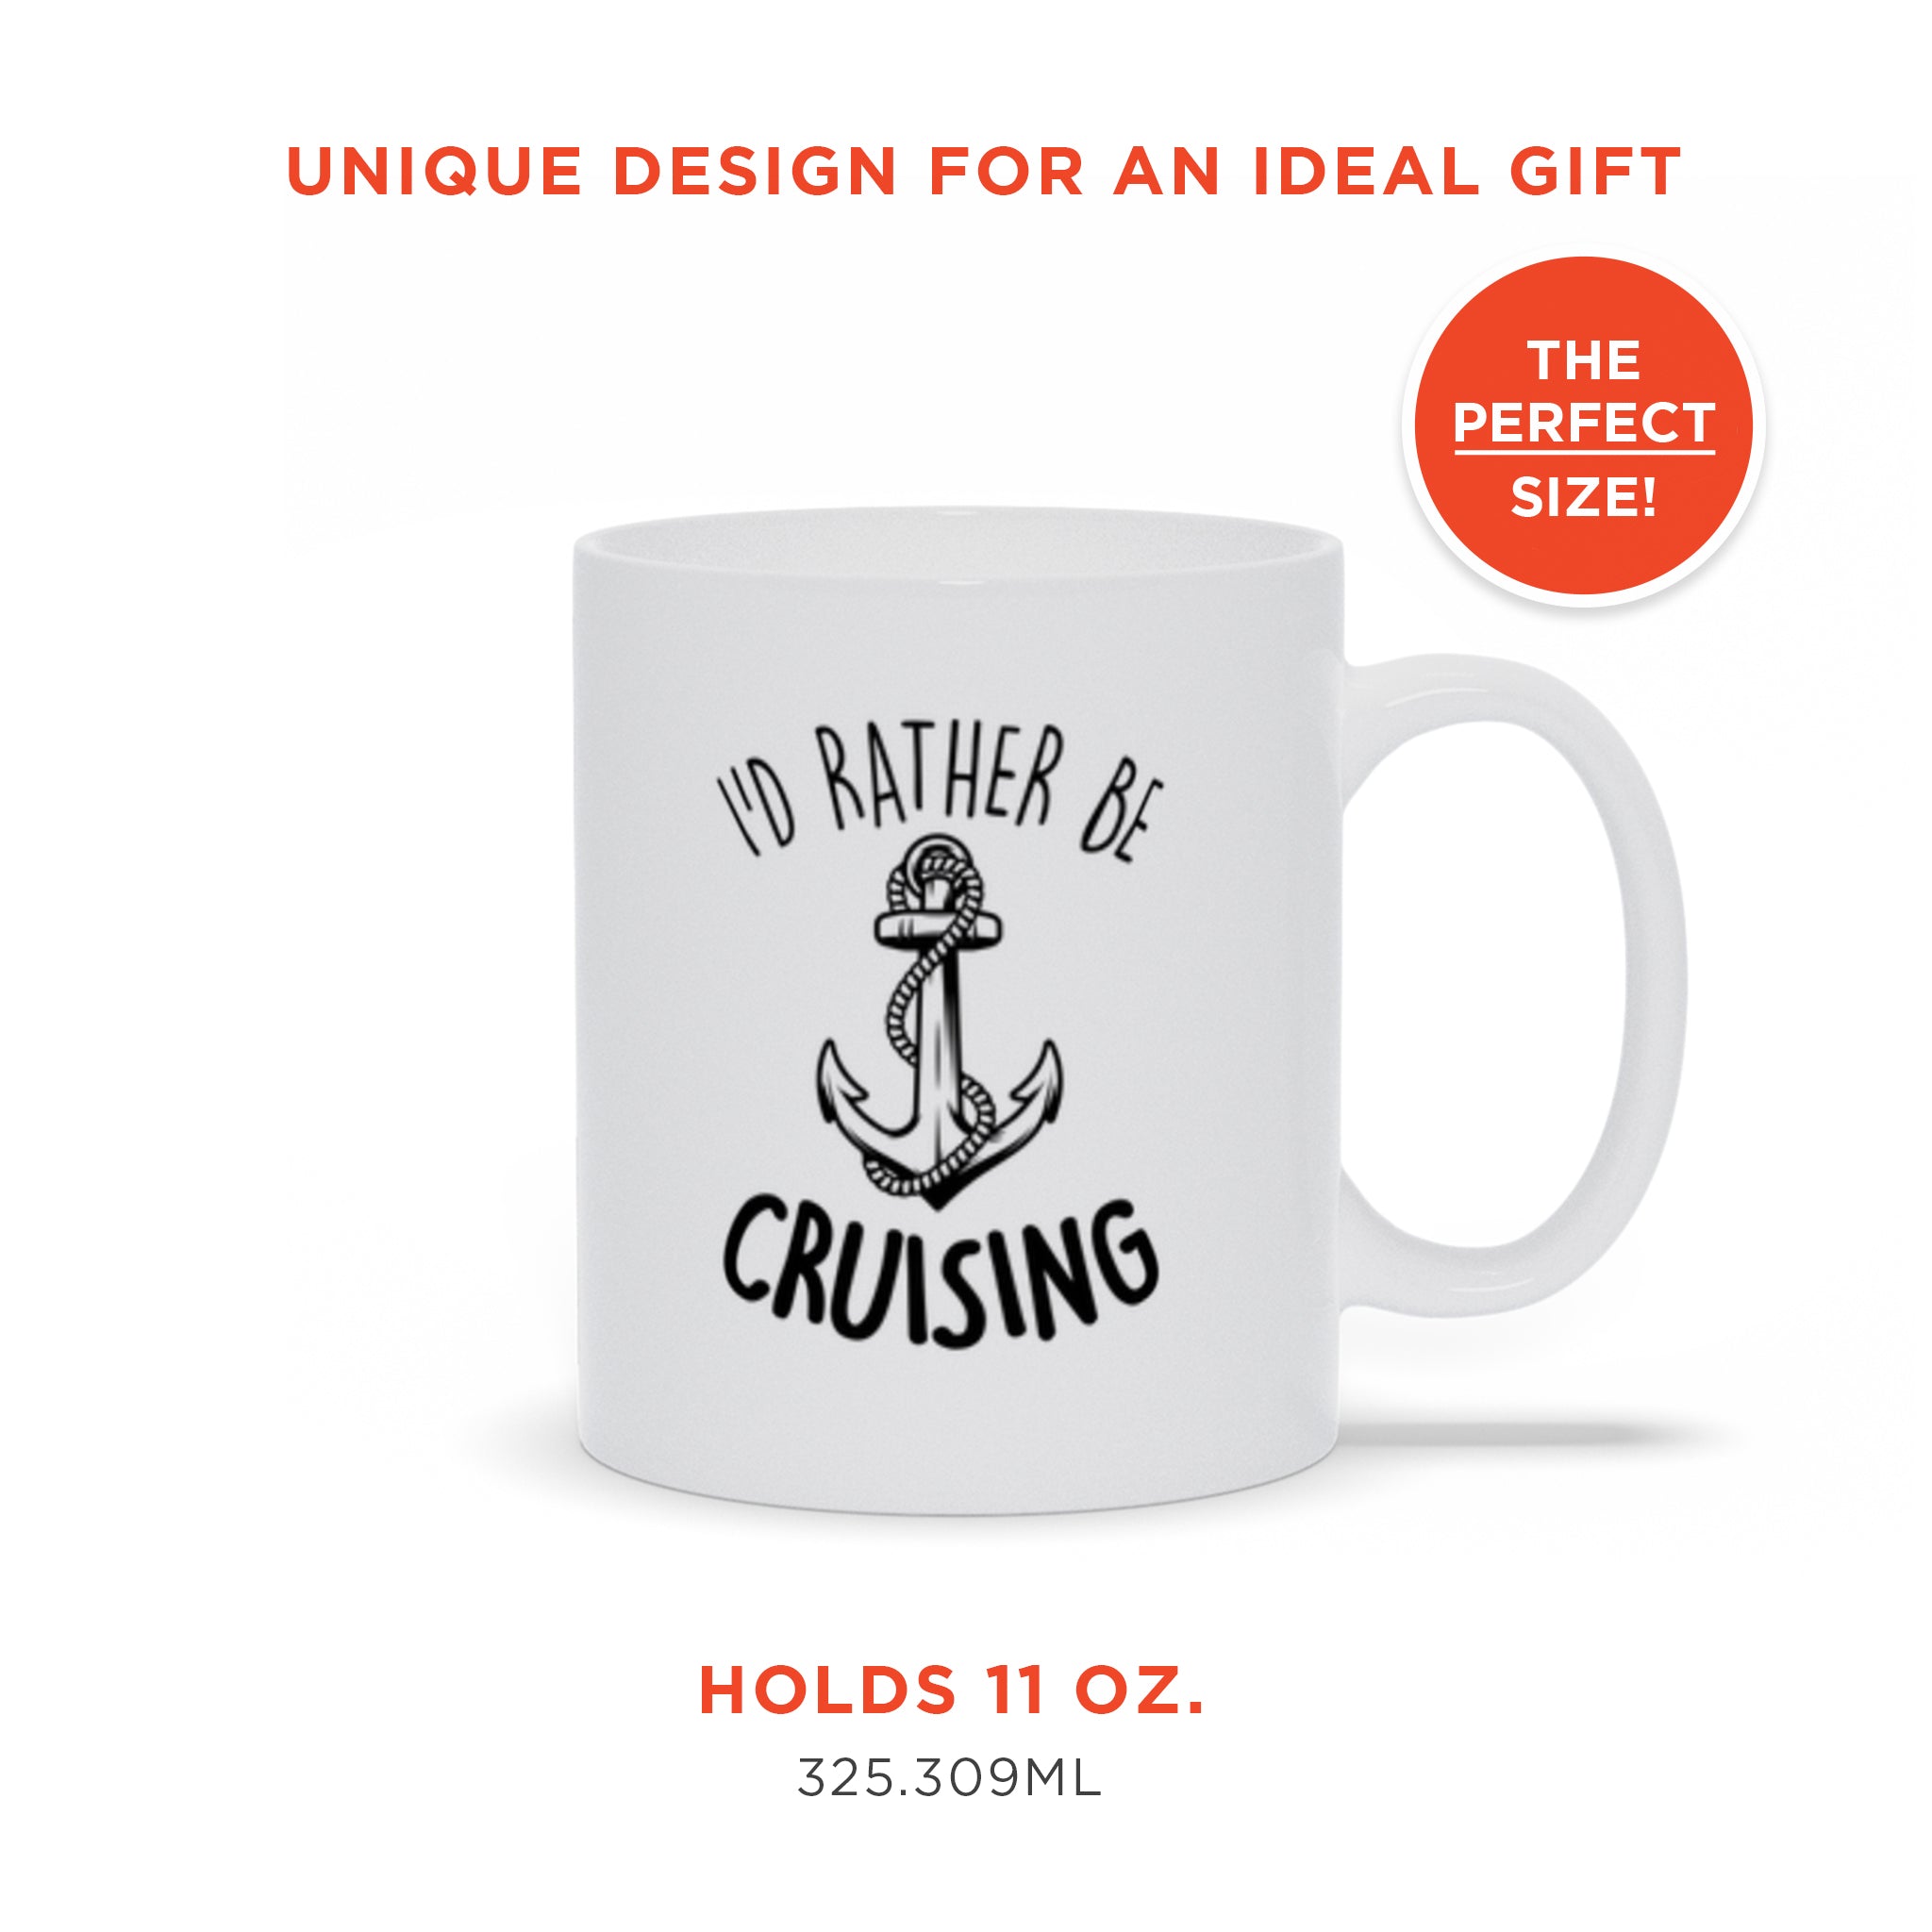 I'd Rather Be Cruising Ceramic Mug